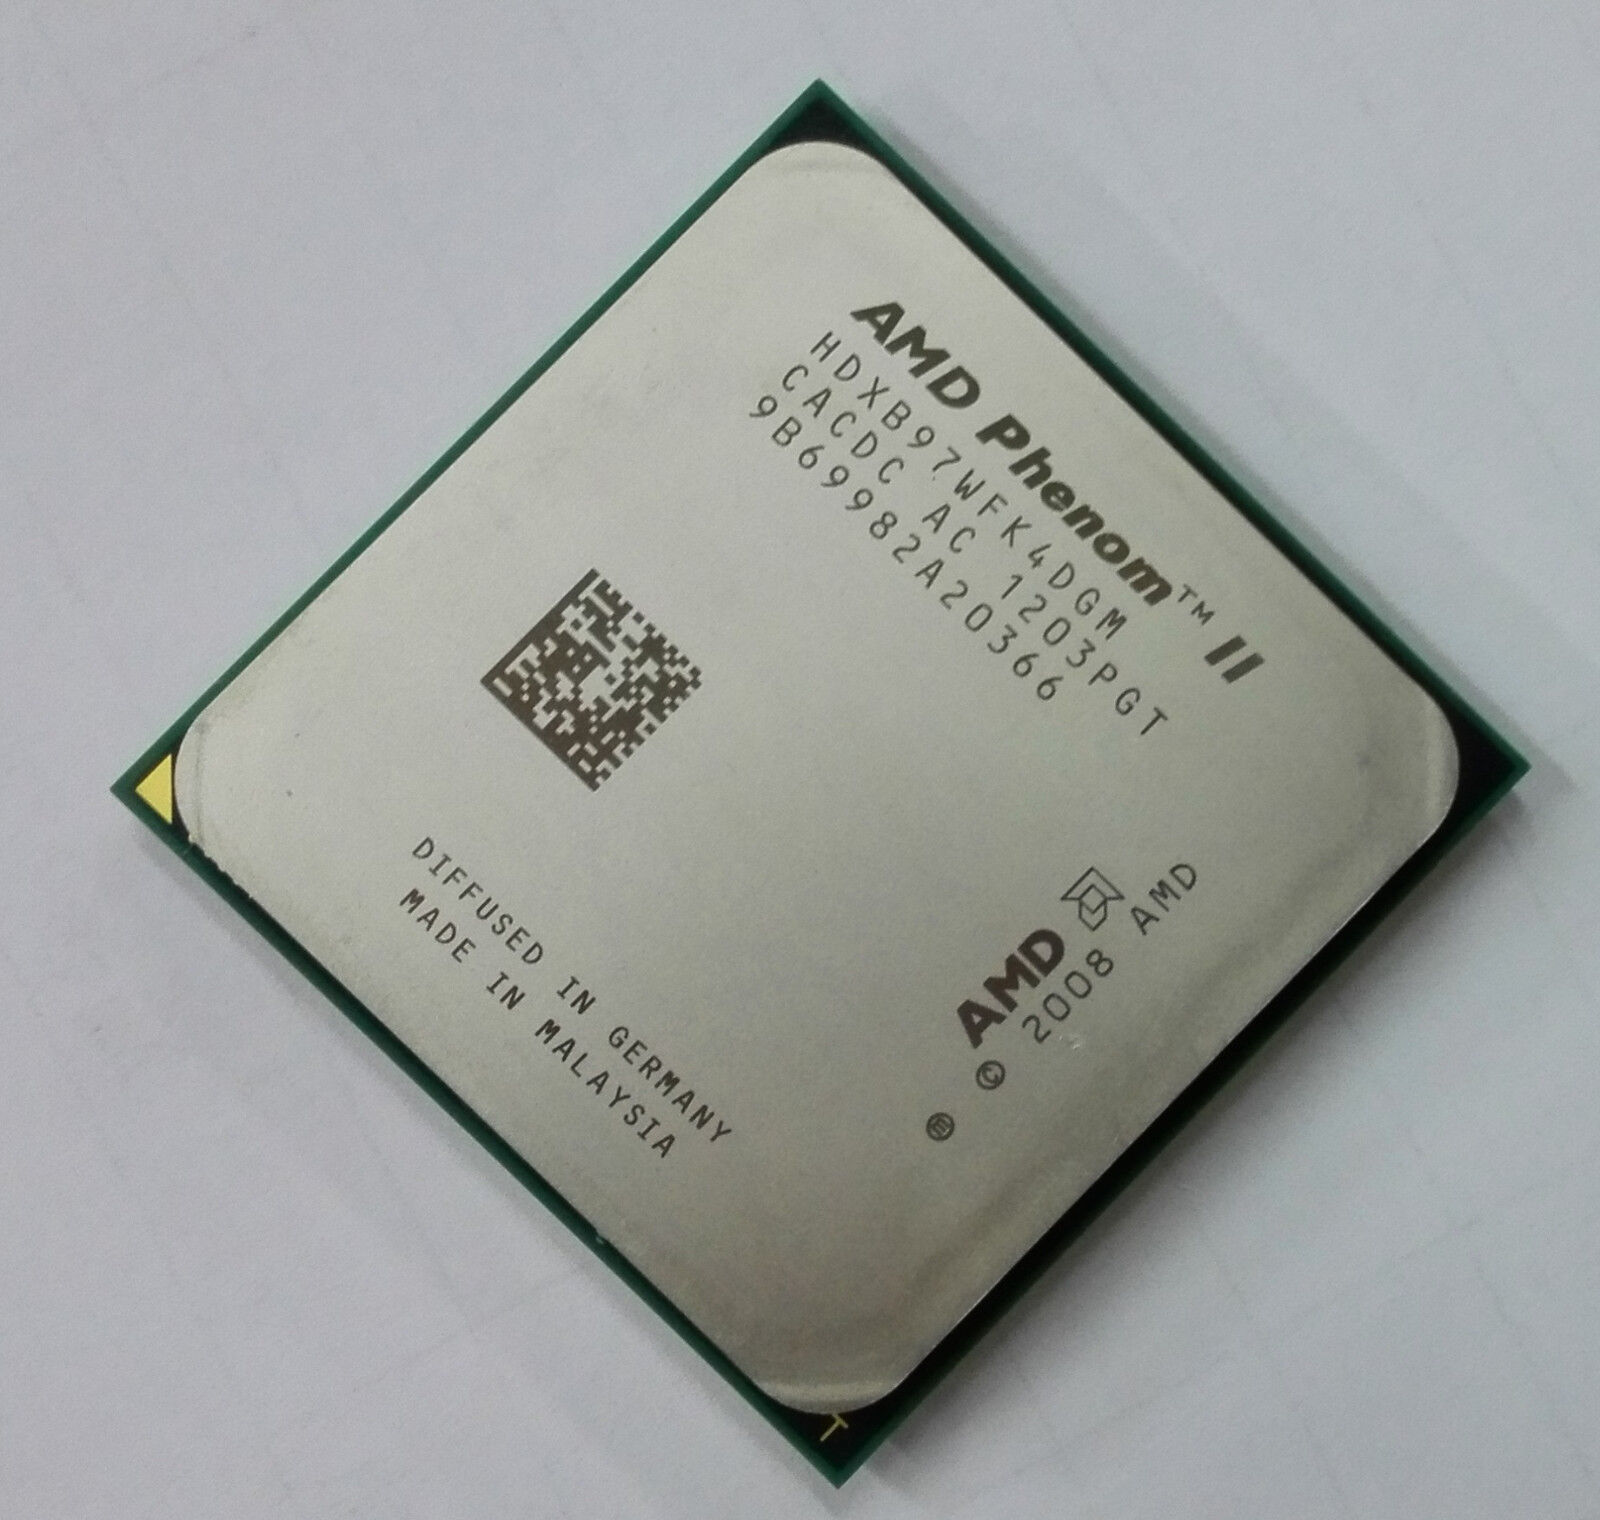  AMD Phenom II X4 B97 Desktop CPU HDXB97WFK4DGM AM2+&AM3 3.2G 95W